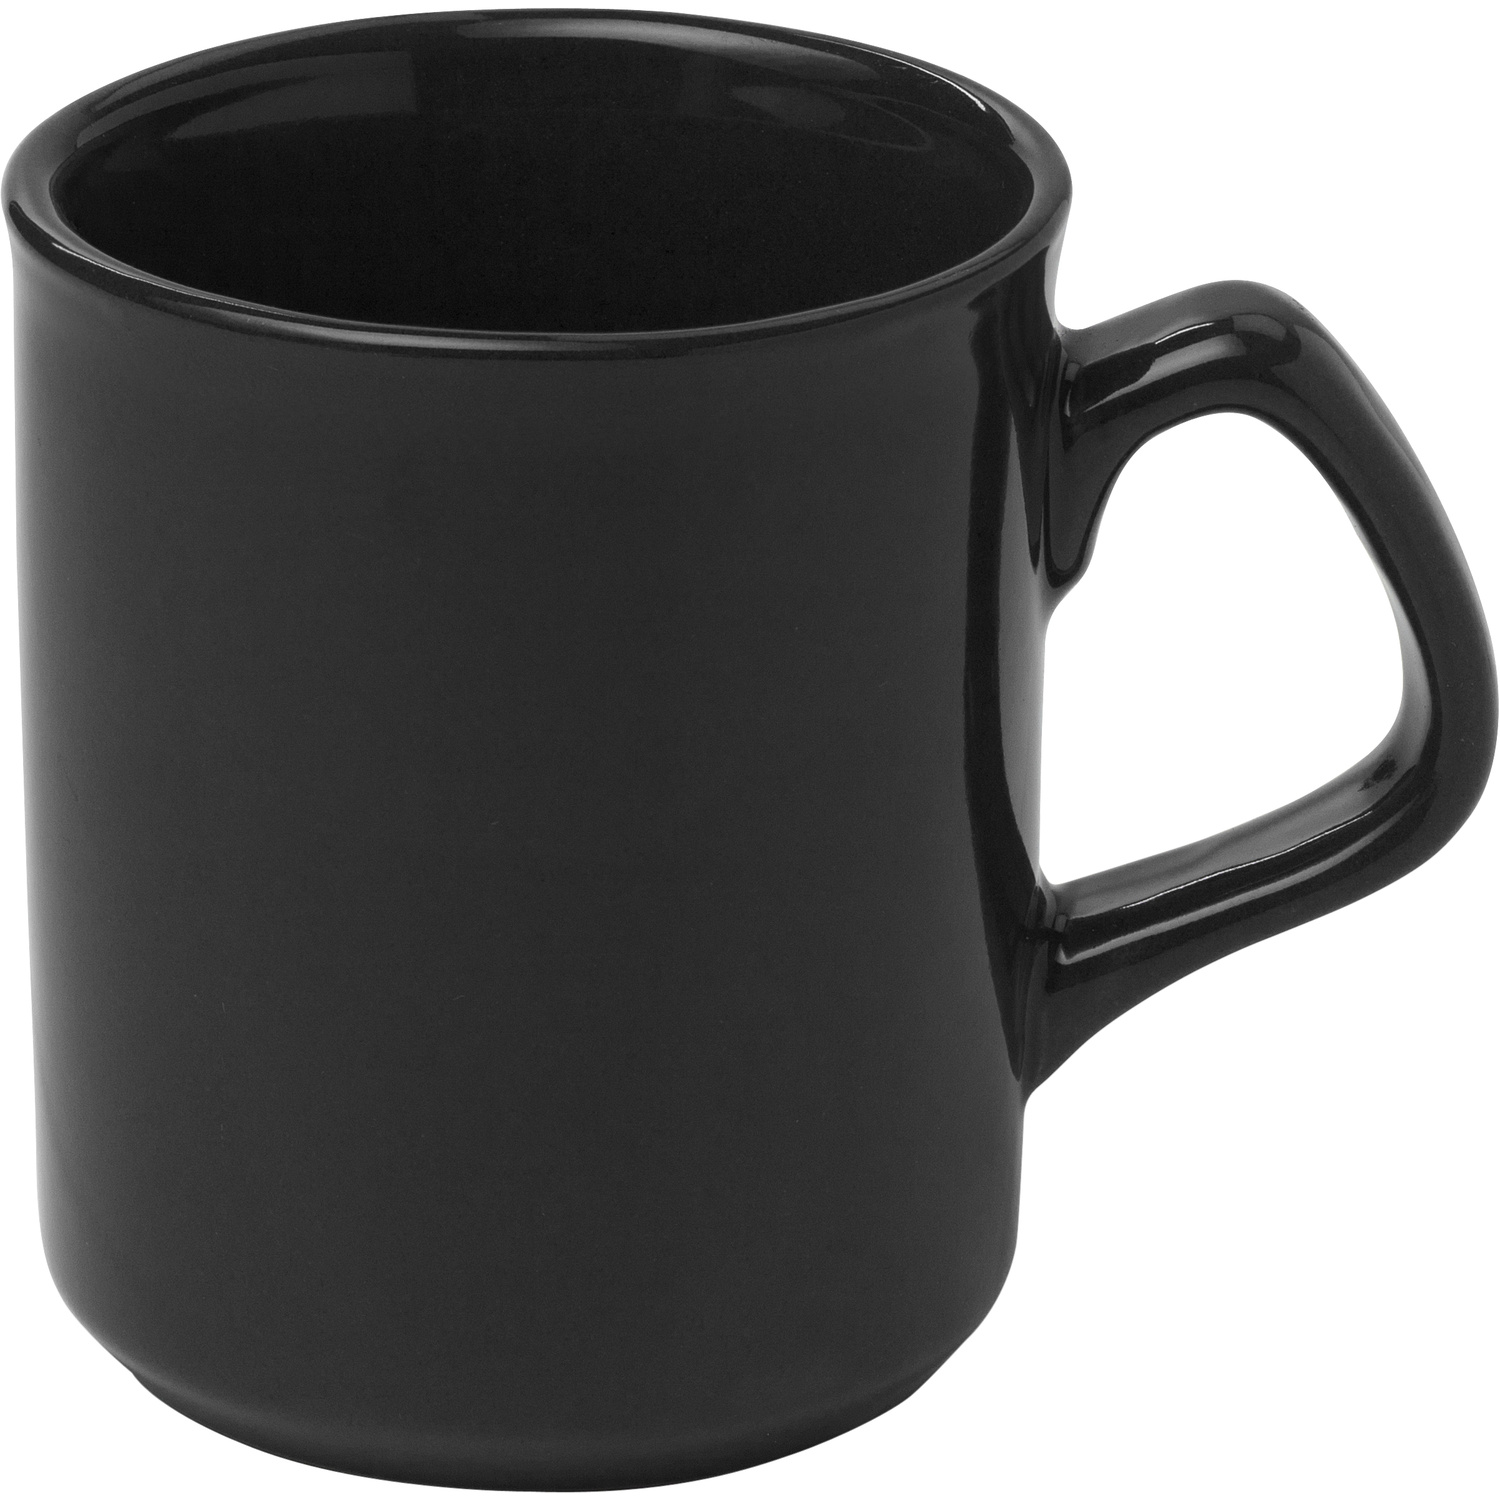 002834 001999999 3d090 frt pro01 fal - Porcelain mug (250ml)